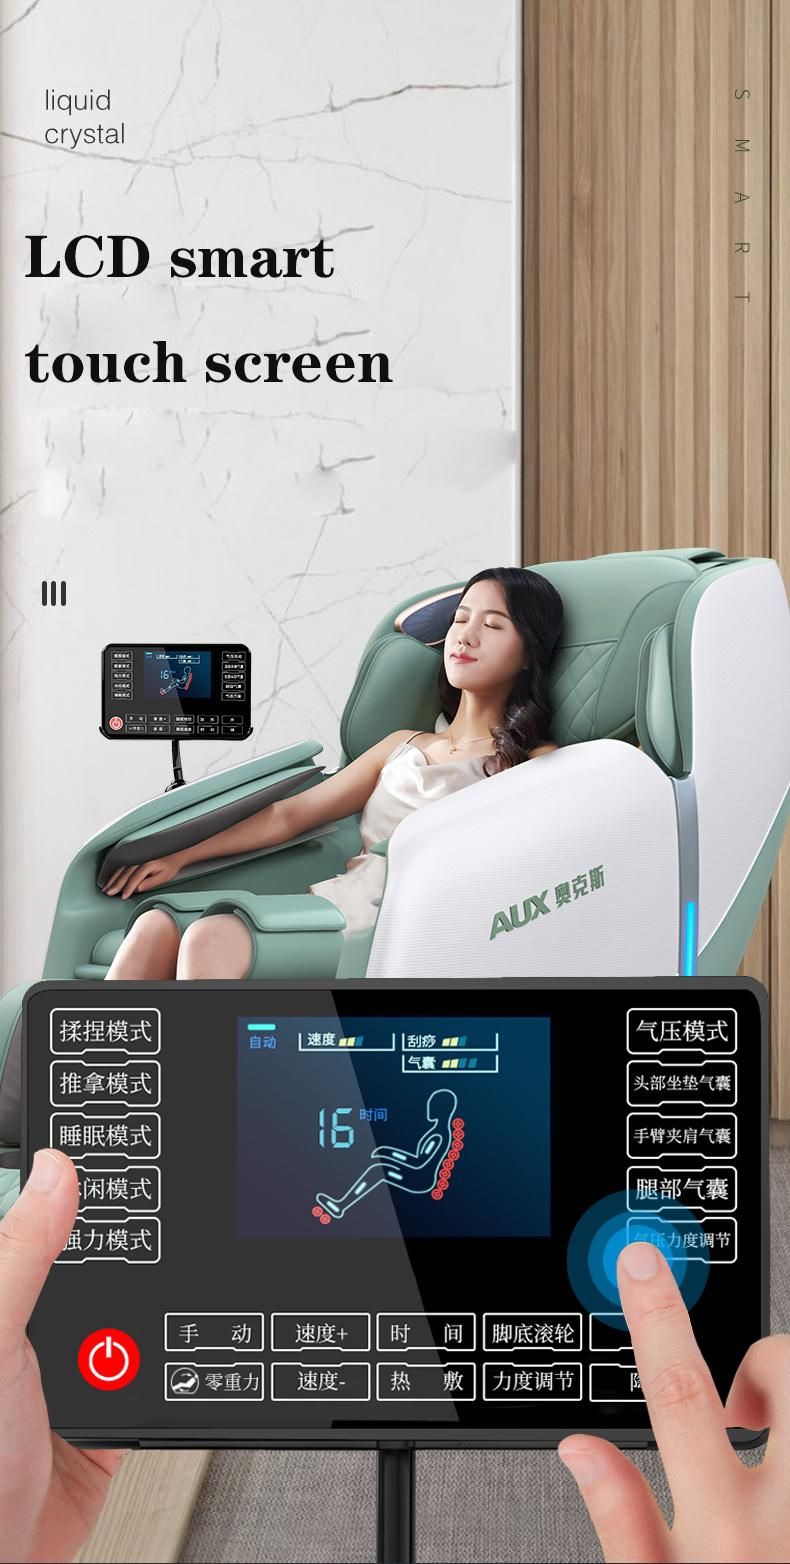 Sauron H450c Canada Luxury Electric 4D Zero Gravity Full Body Airbag Shiatsu Recliner Massage Chair